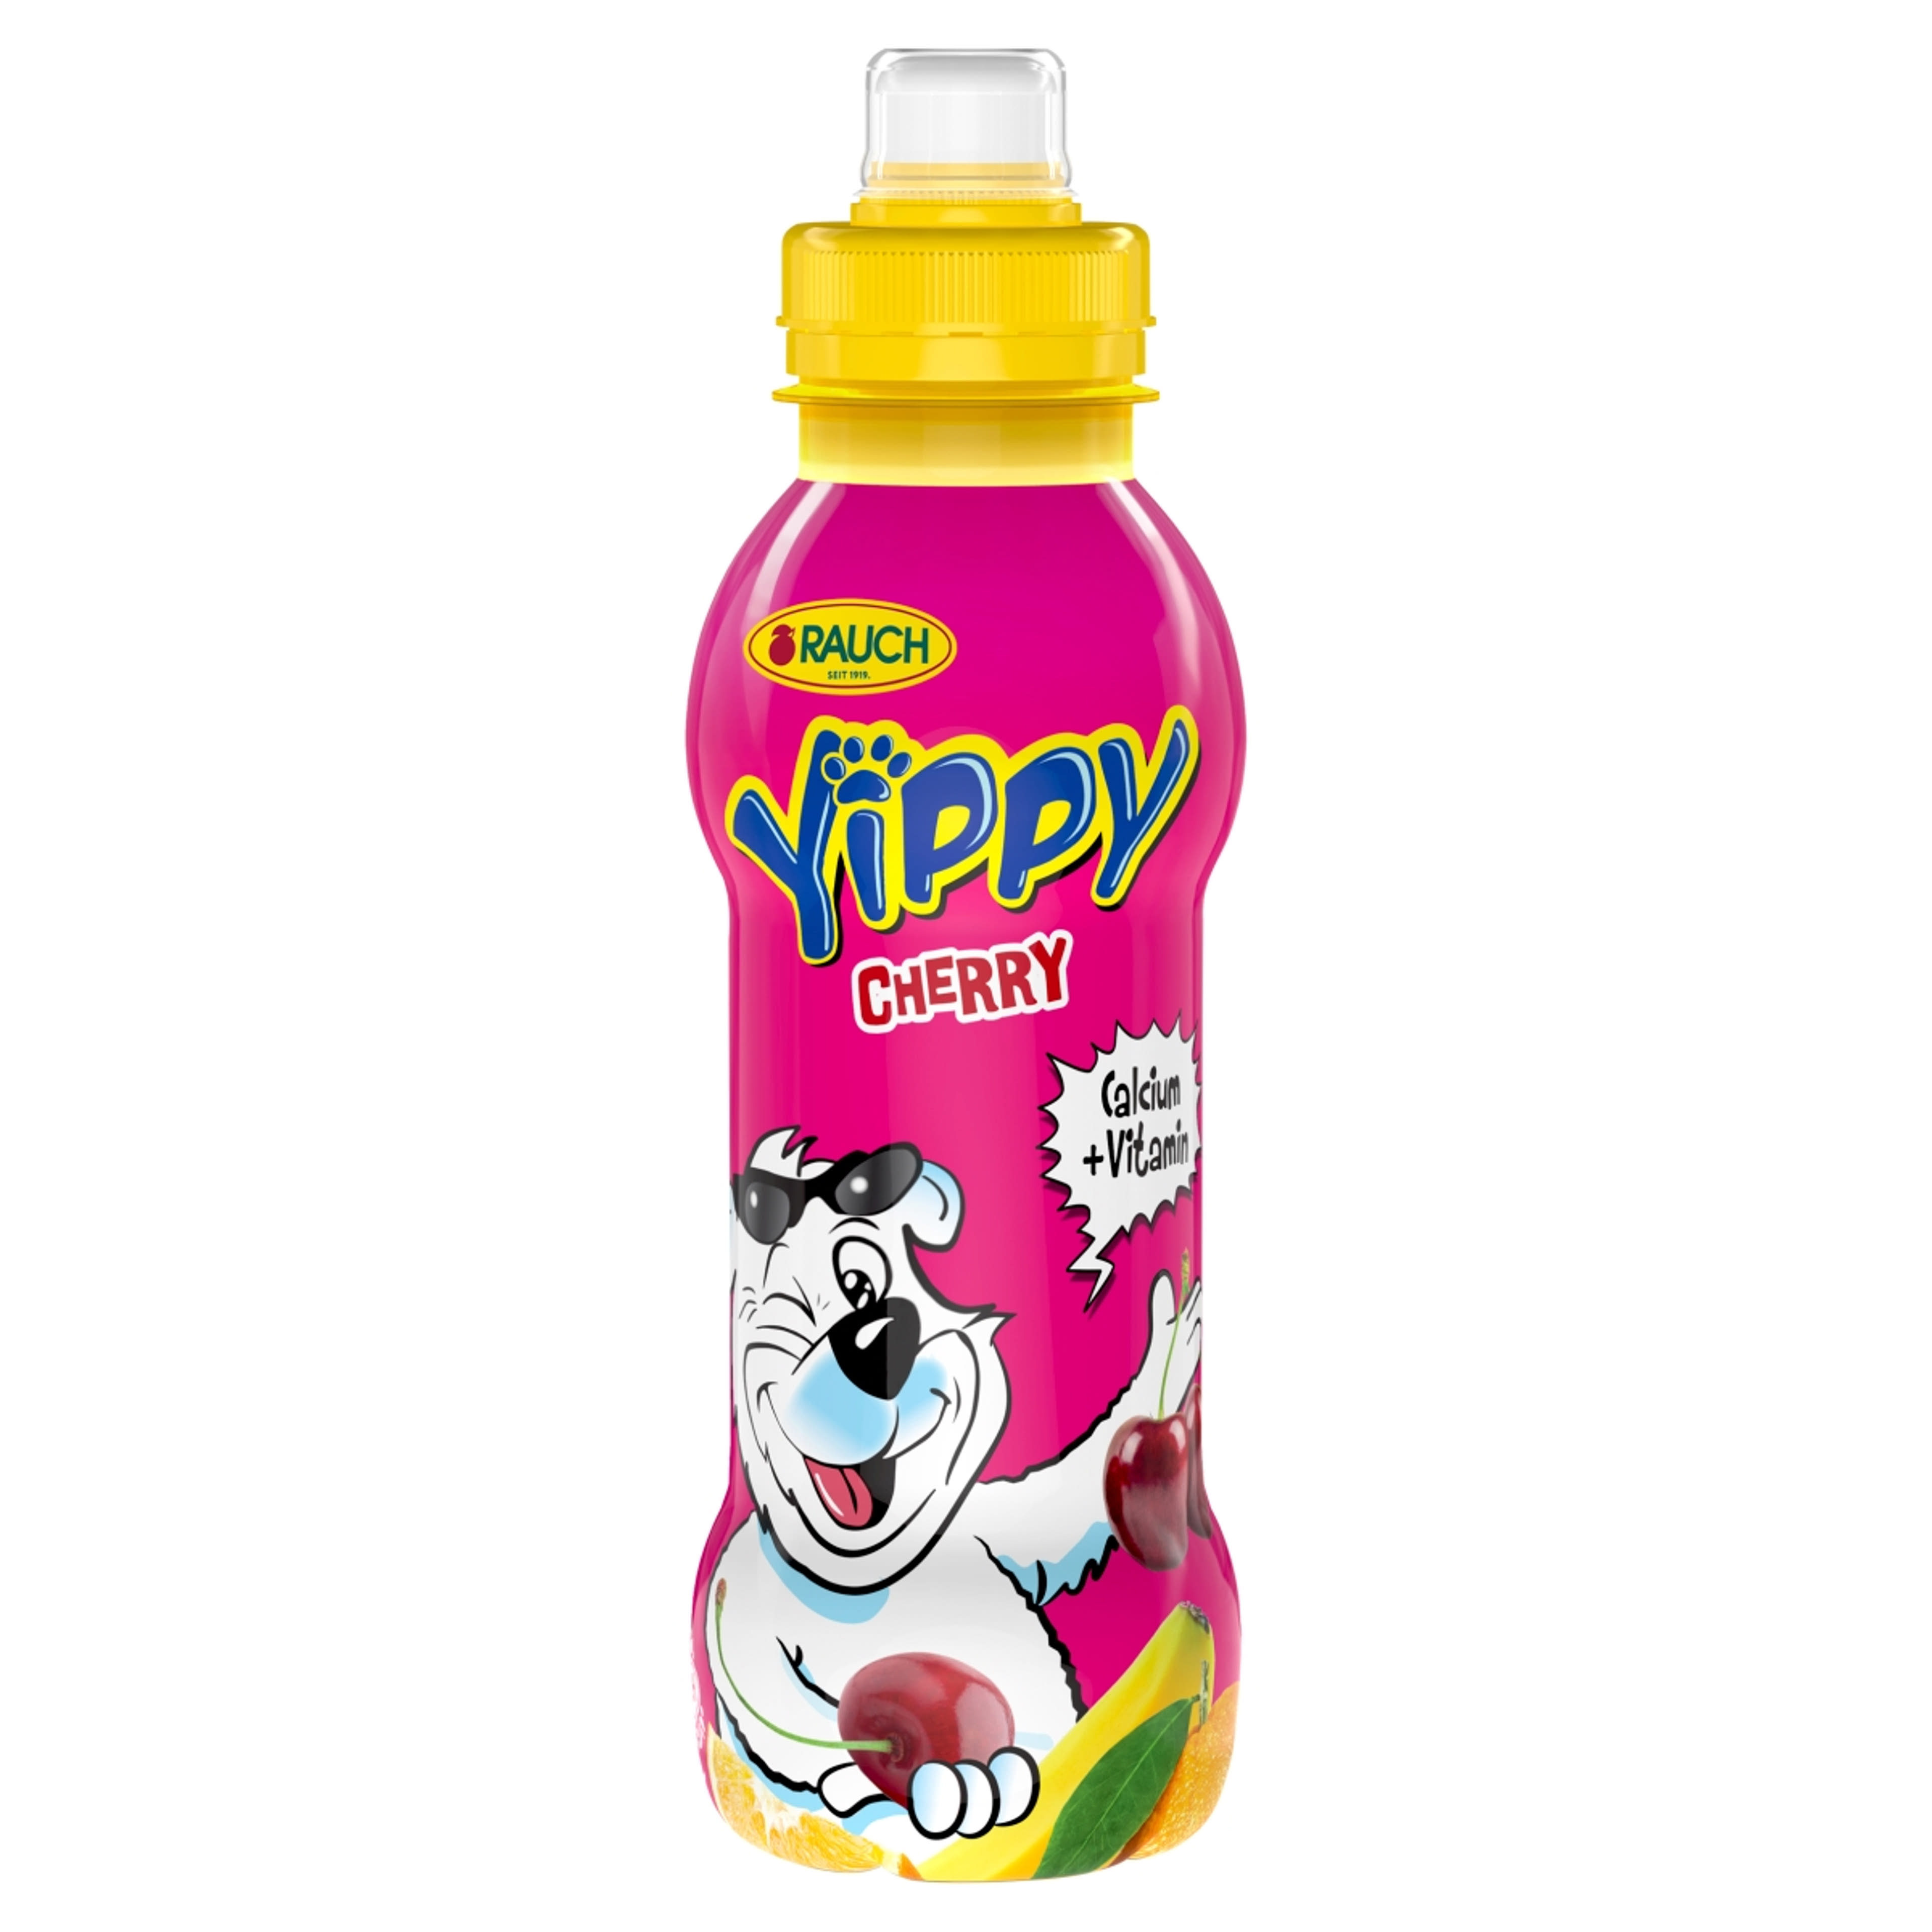 Yippy cherry pet - 330 ml